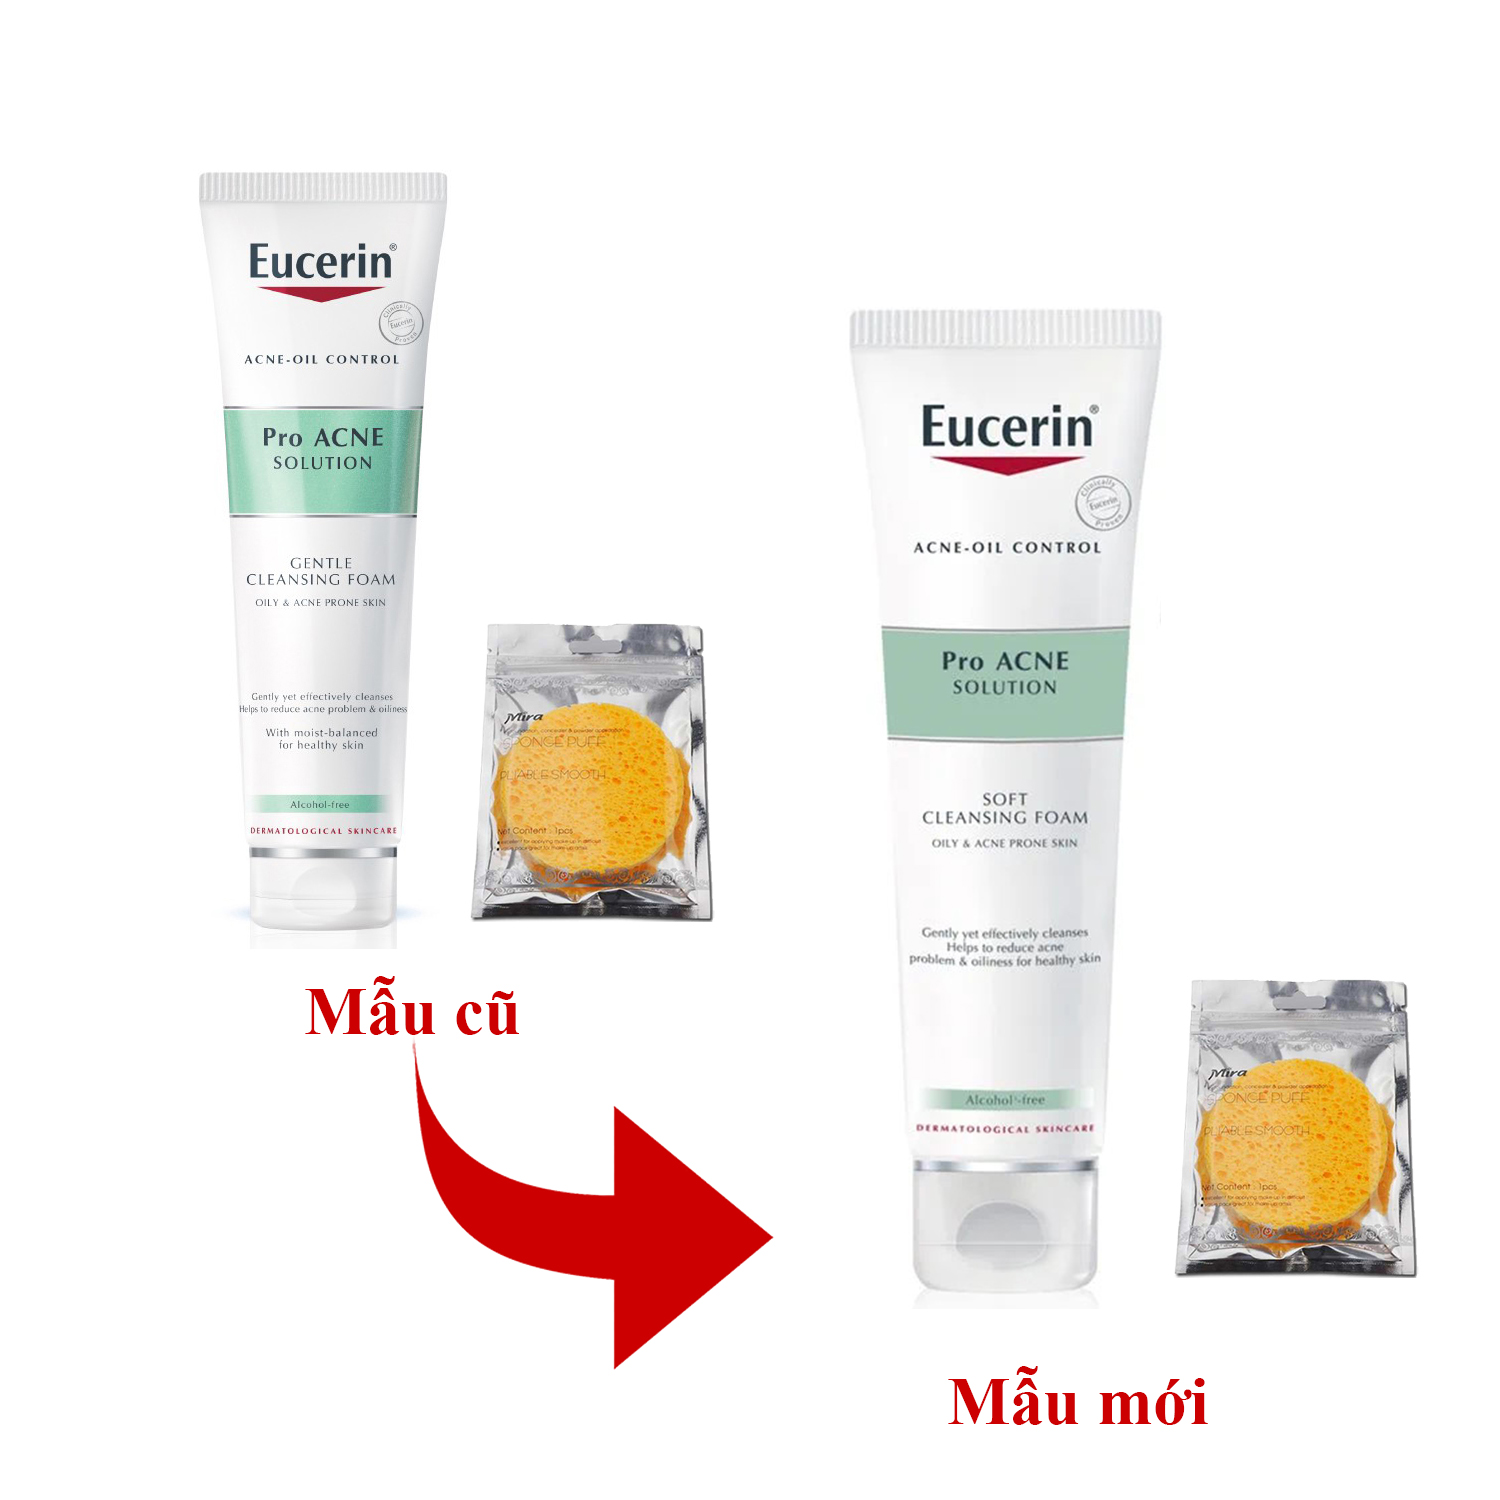 Sữa rửa mặt tạo bọt dịu nhẹ dành cho da mụn Eucerin Pro Acne Cleansing Foam 150g + tặng bọt biên rửa mặt